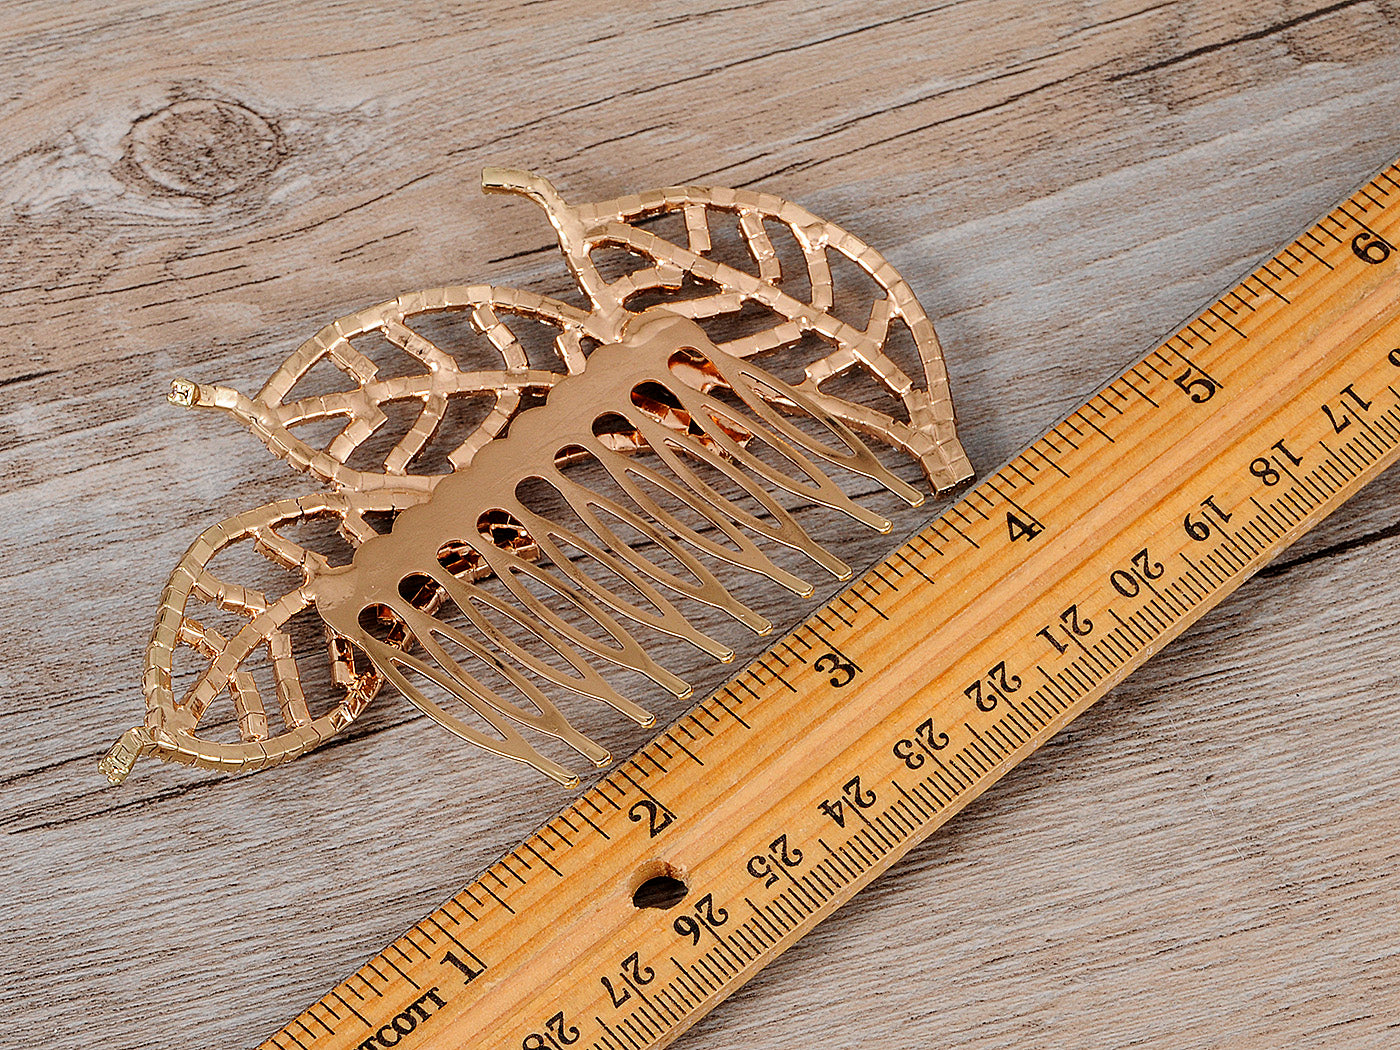 Leaf Trio Jewelry Hair Clip Comb